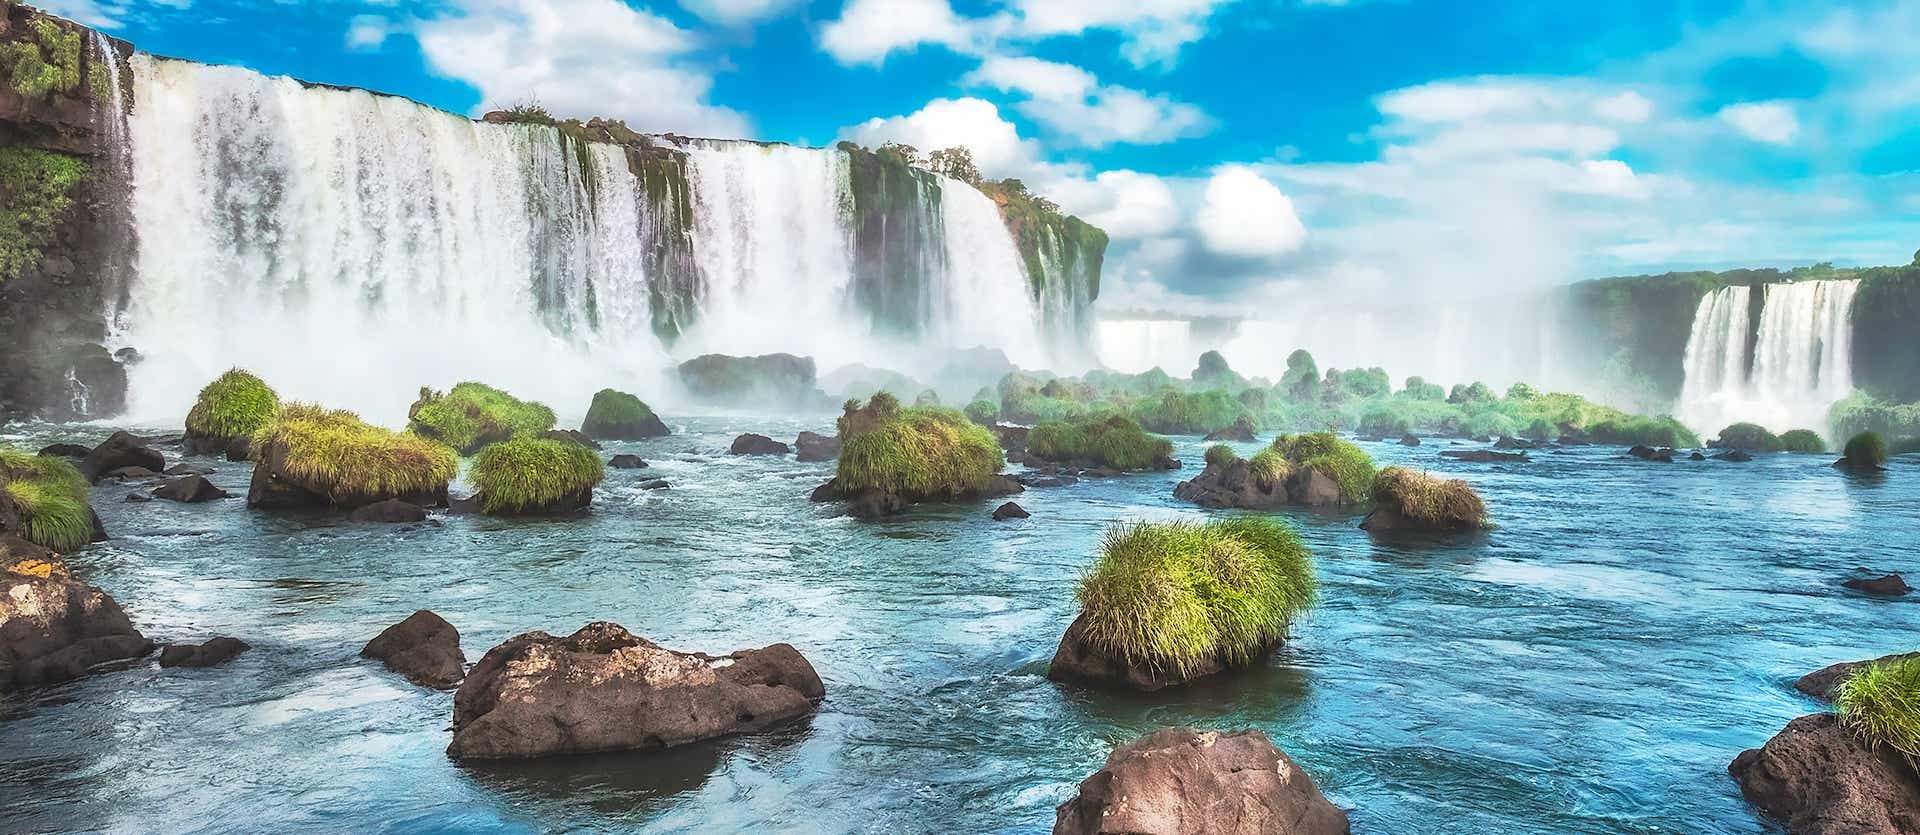 Iguazú Waterfalls <span class="iconos separador"></span> Brazil